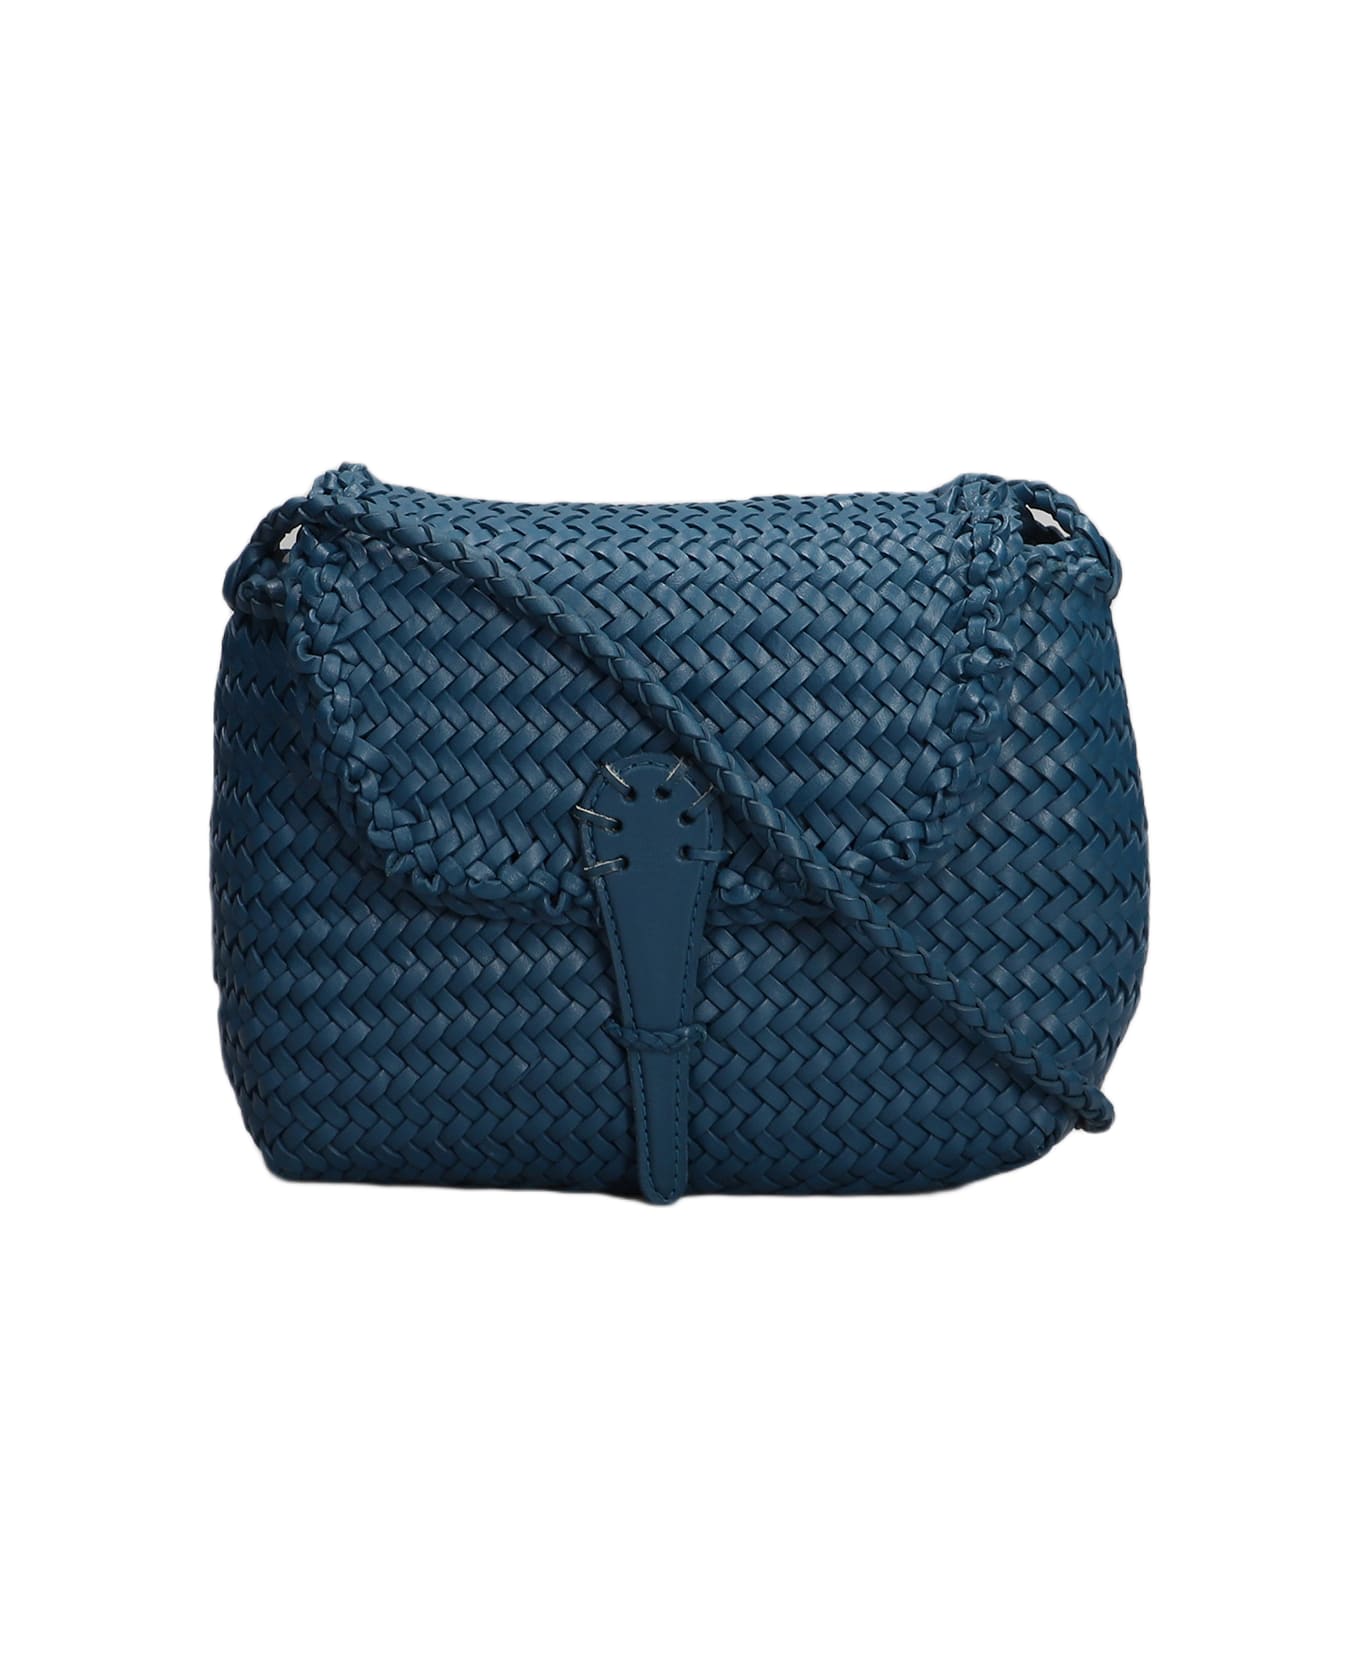 Dragon Diffusion Mini City Shoulder Bag In Blue Leather - blue